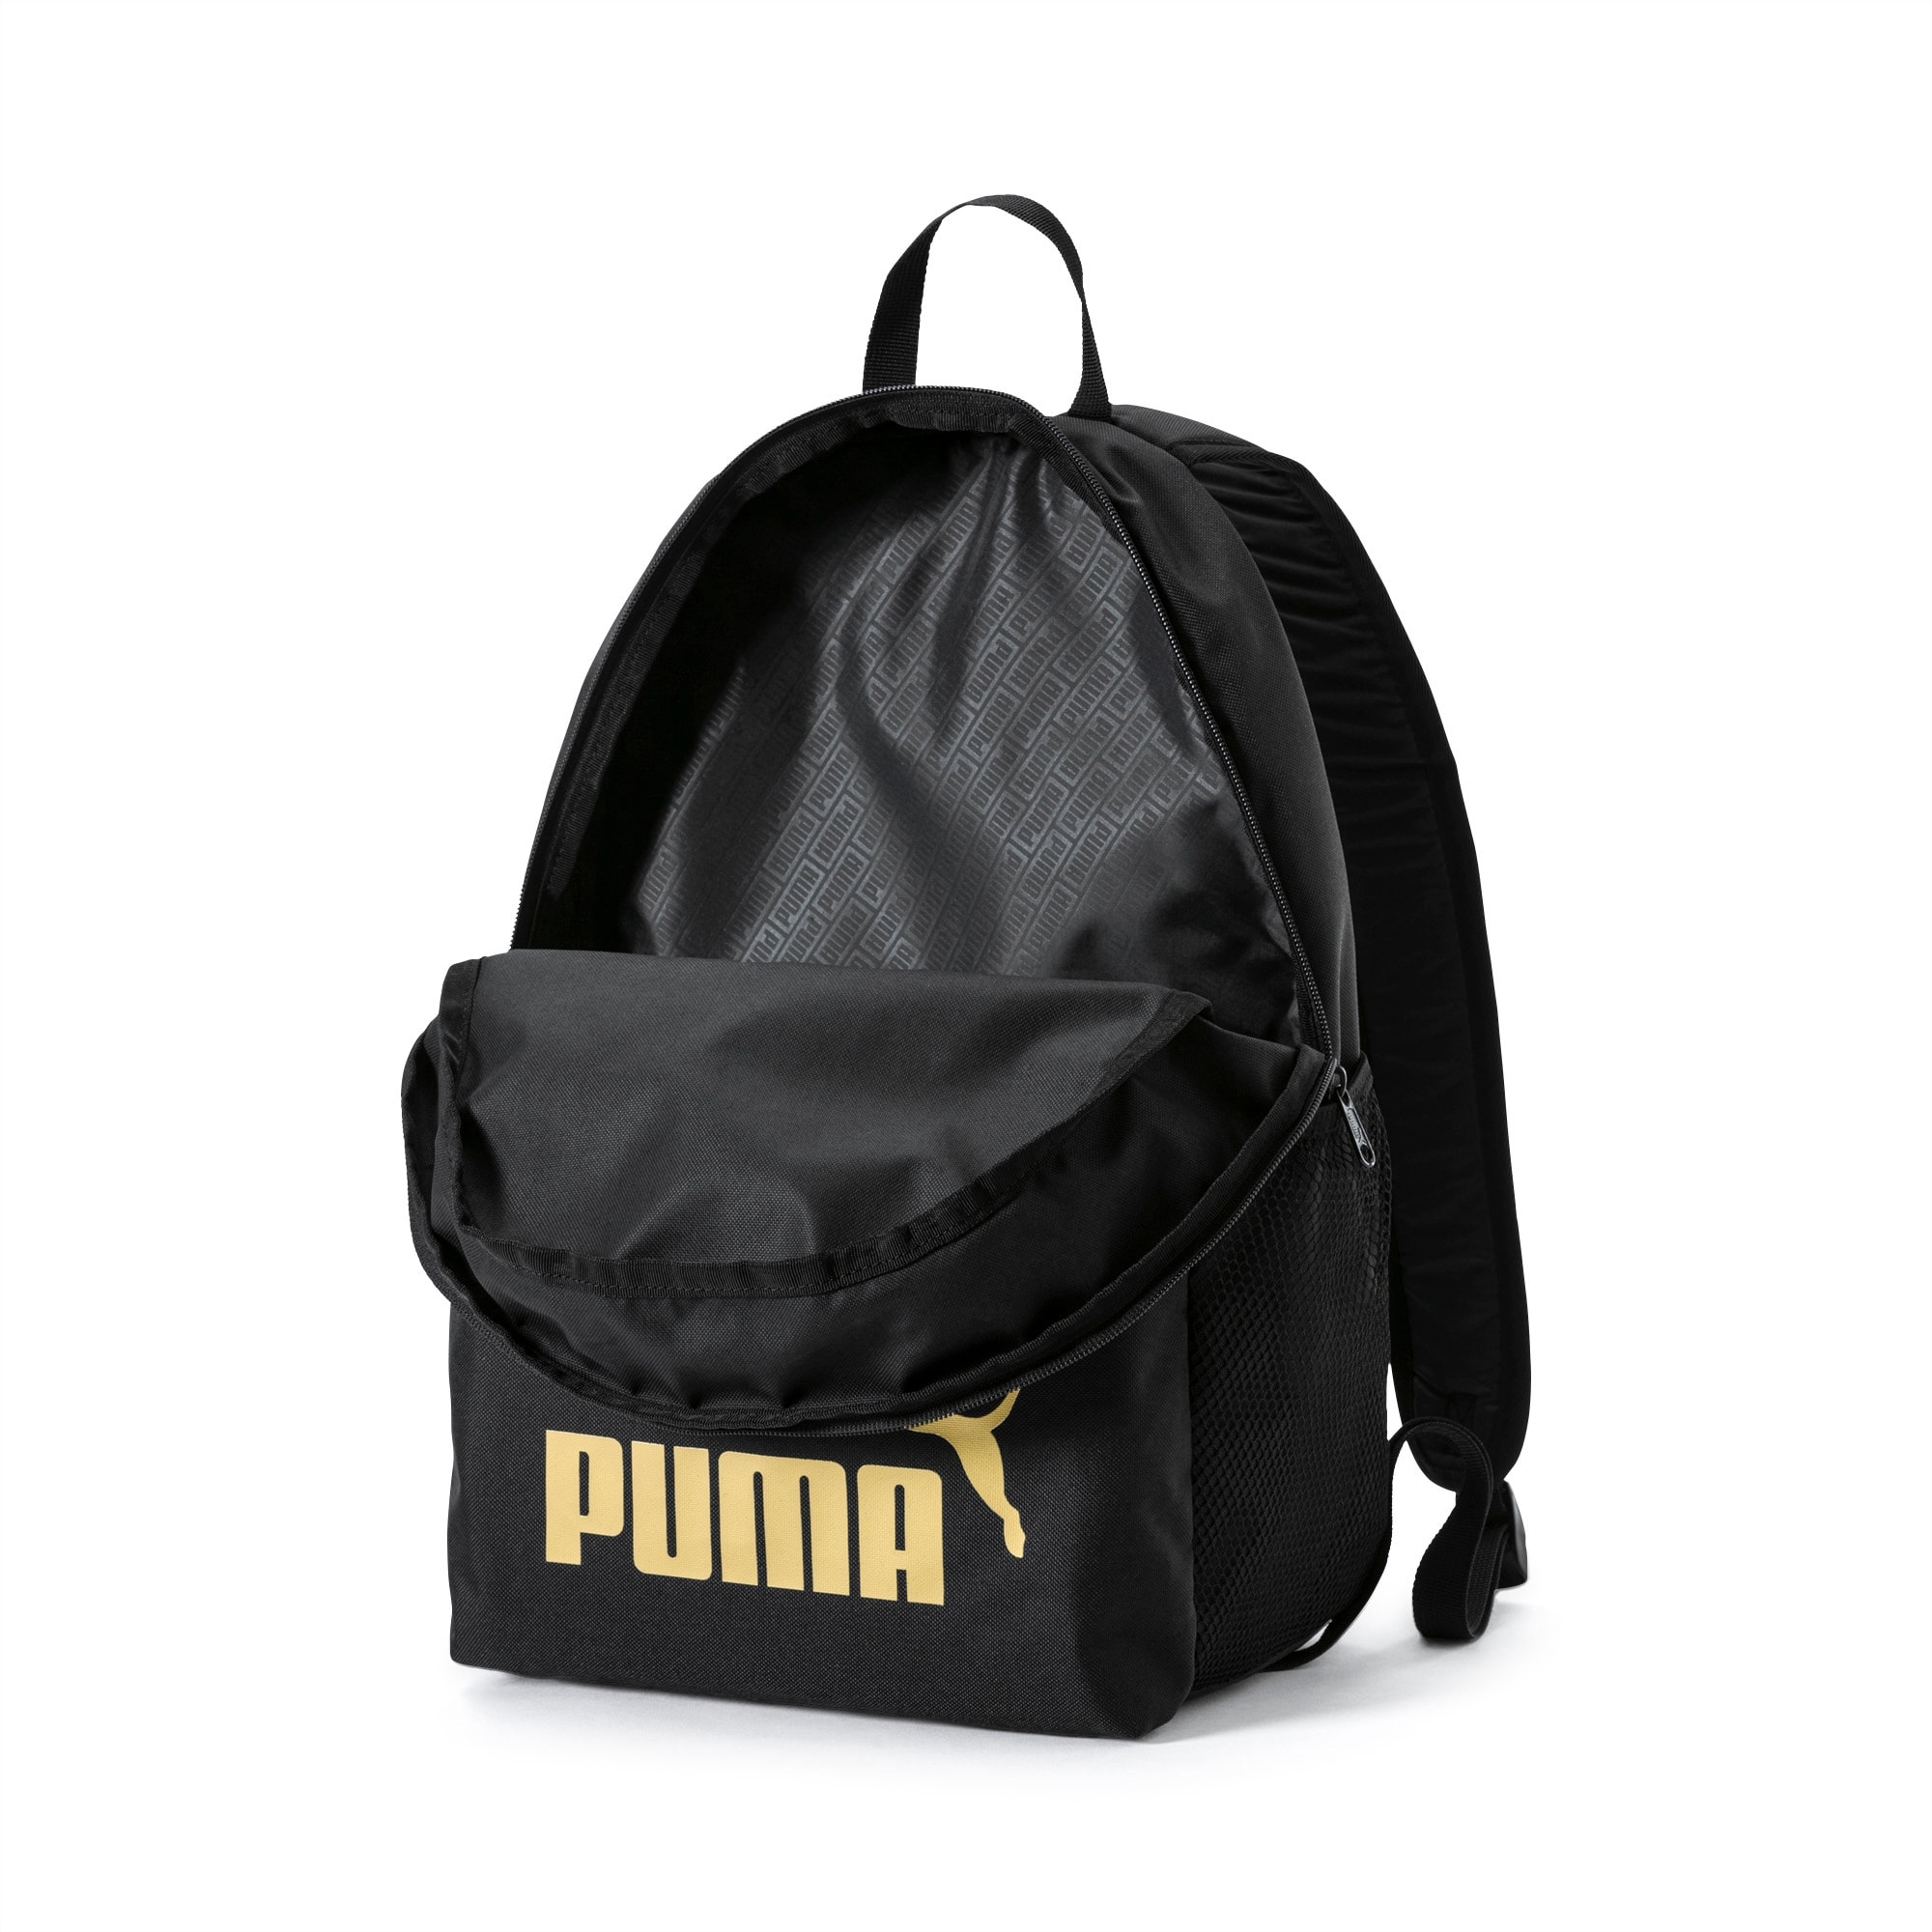 puma backpack malaysia